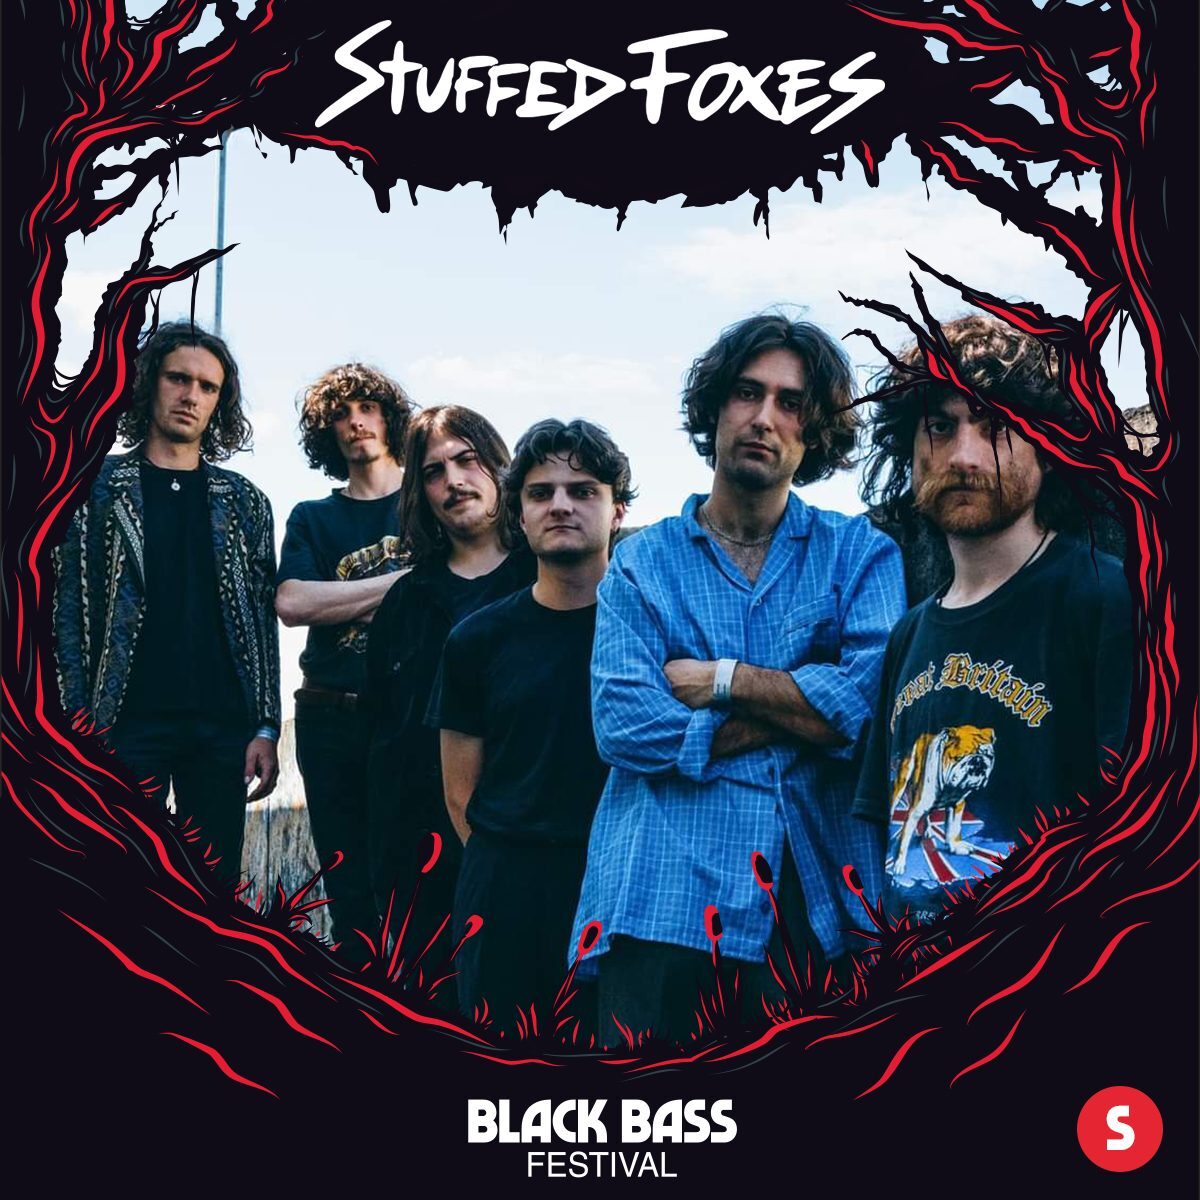 Stuffed Foxes|Black Bass Festival